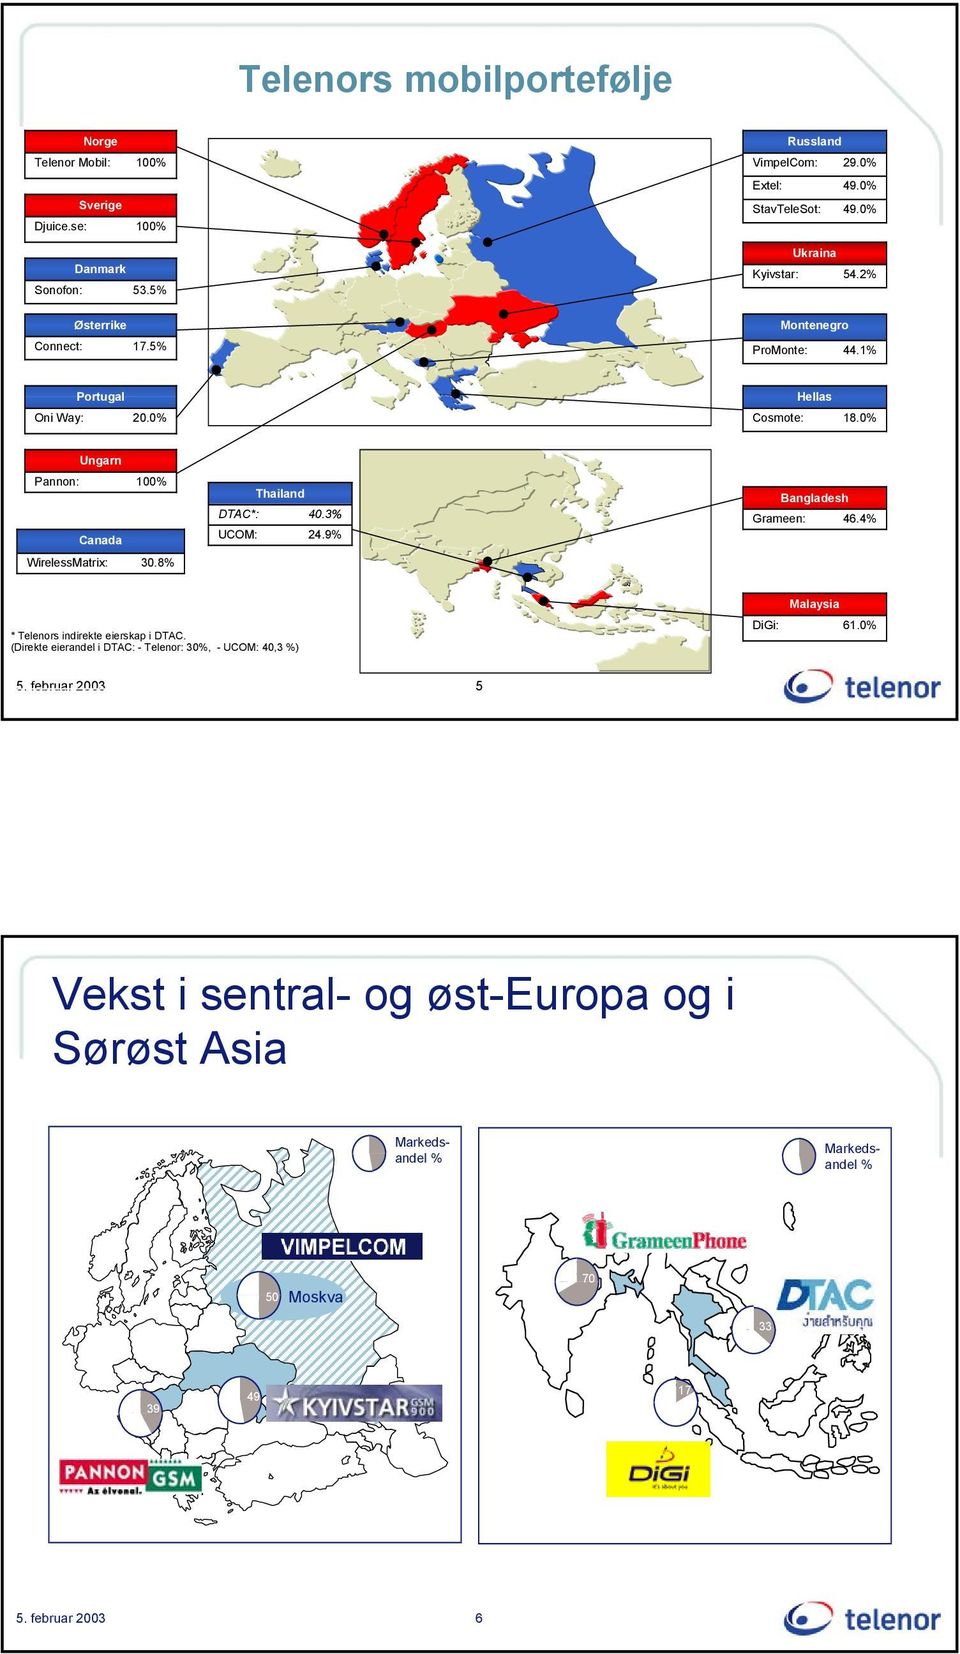 0% Ungarn Pannon: Canada 100% Thailand DTAC*: 40.3% UCOM: 24.9% Bangladesh Grameen: 46.4% WirelessMatrix: 30.8% * Telenors indirekte eierskap i DTAC.